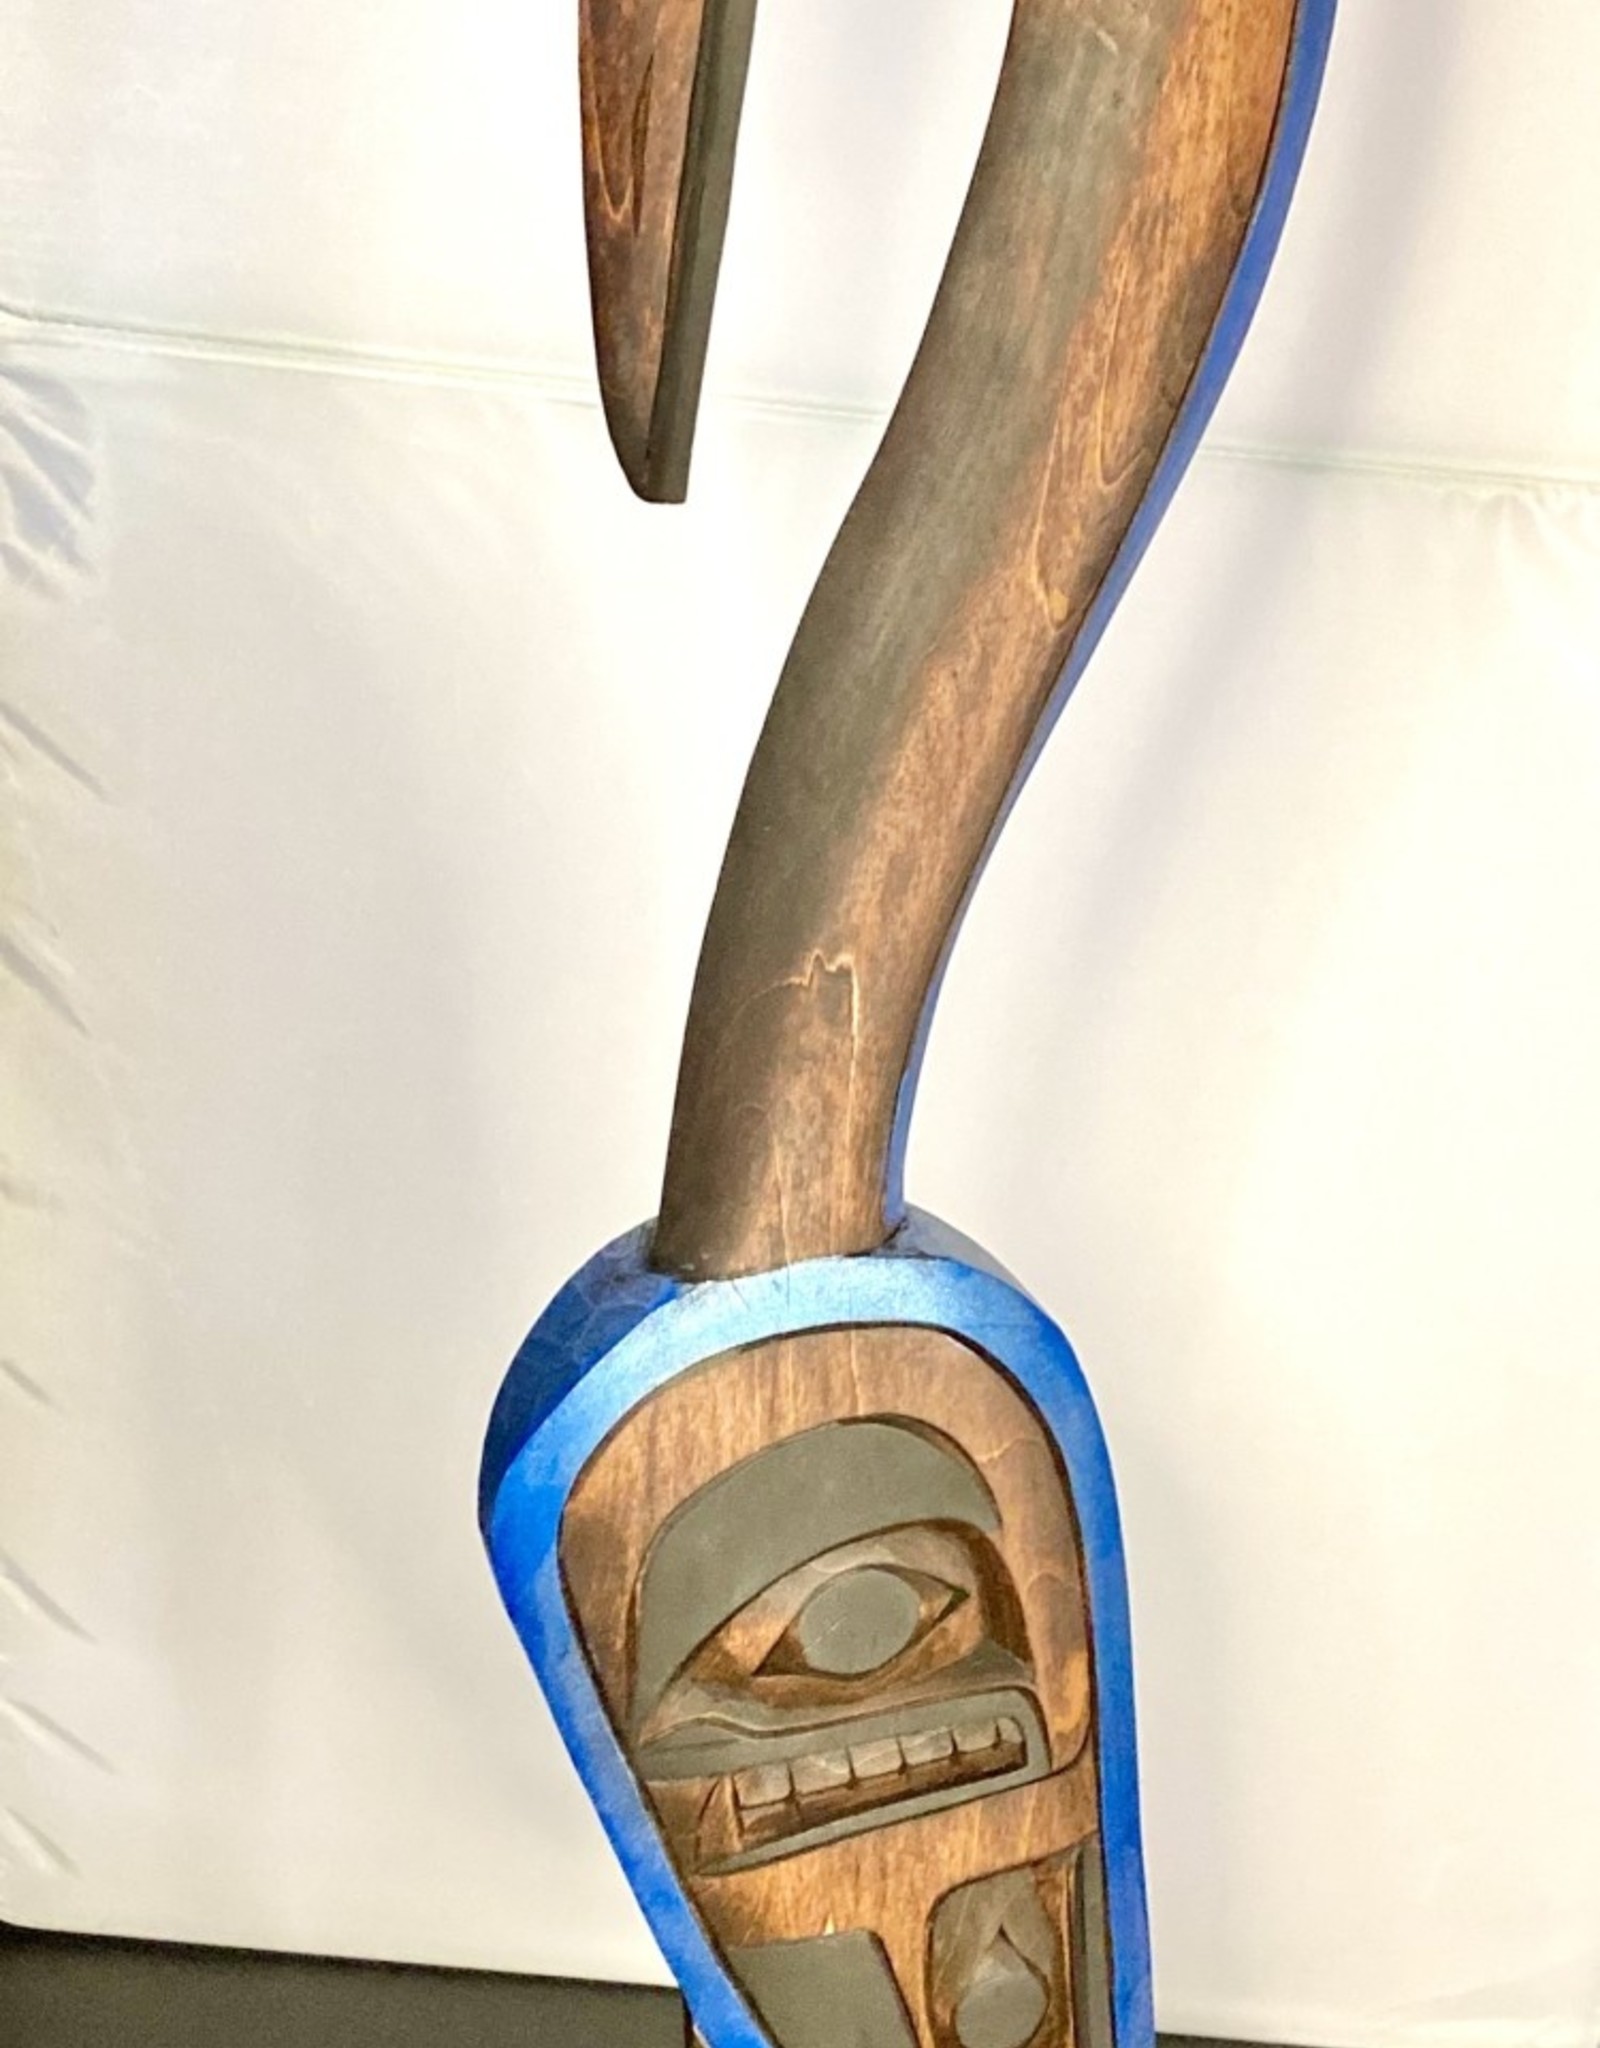 Aboriginal - Aboriginal Carving of a Crane on a Salmon